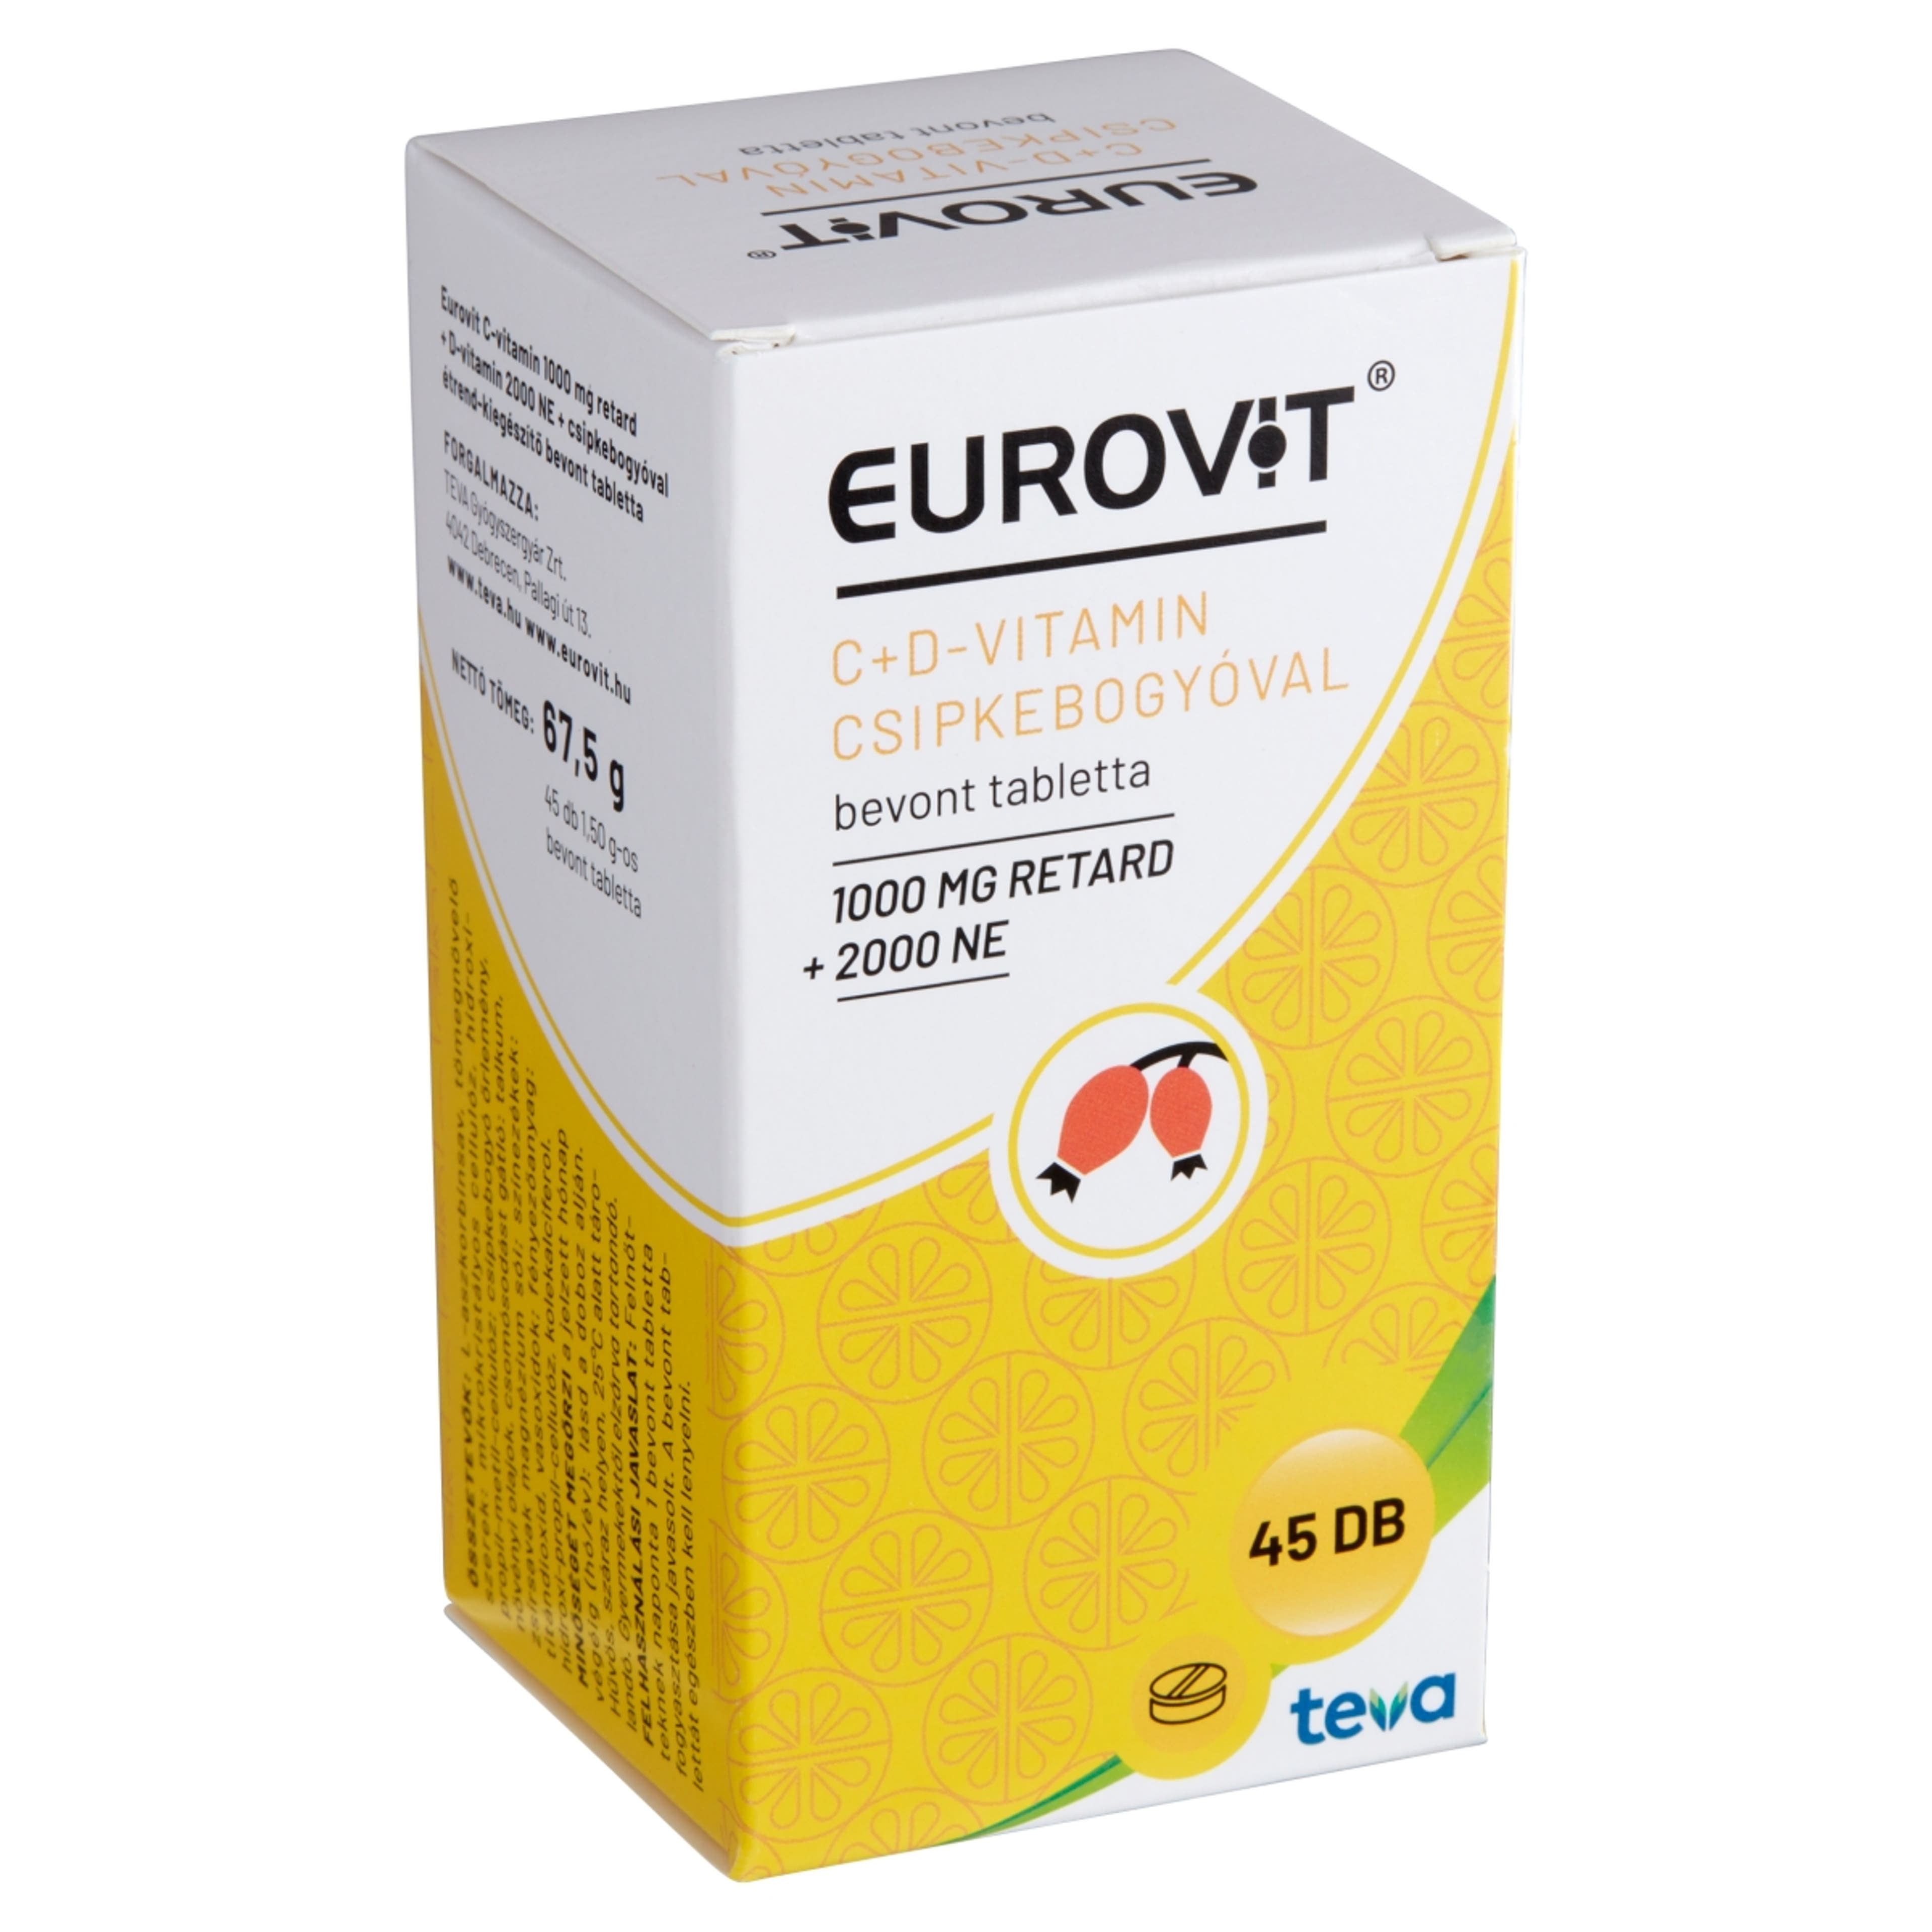 Eurovit C+D vitamin bevont tabletta csipkebogyóval - 45 db-2